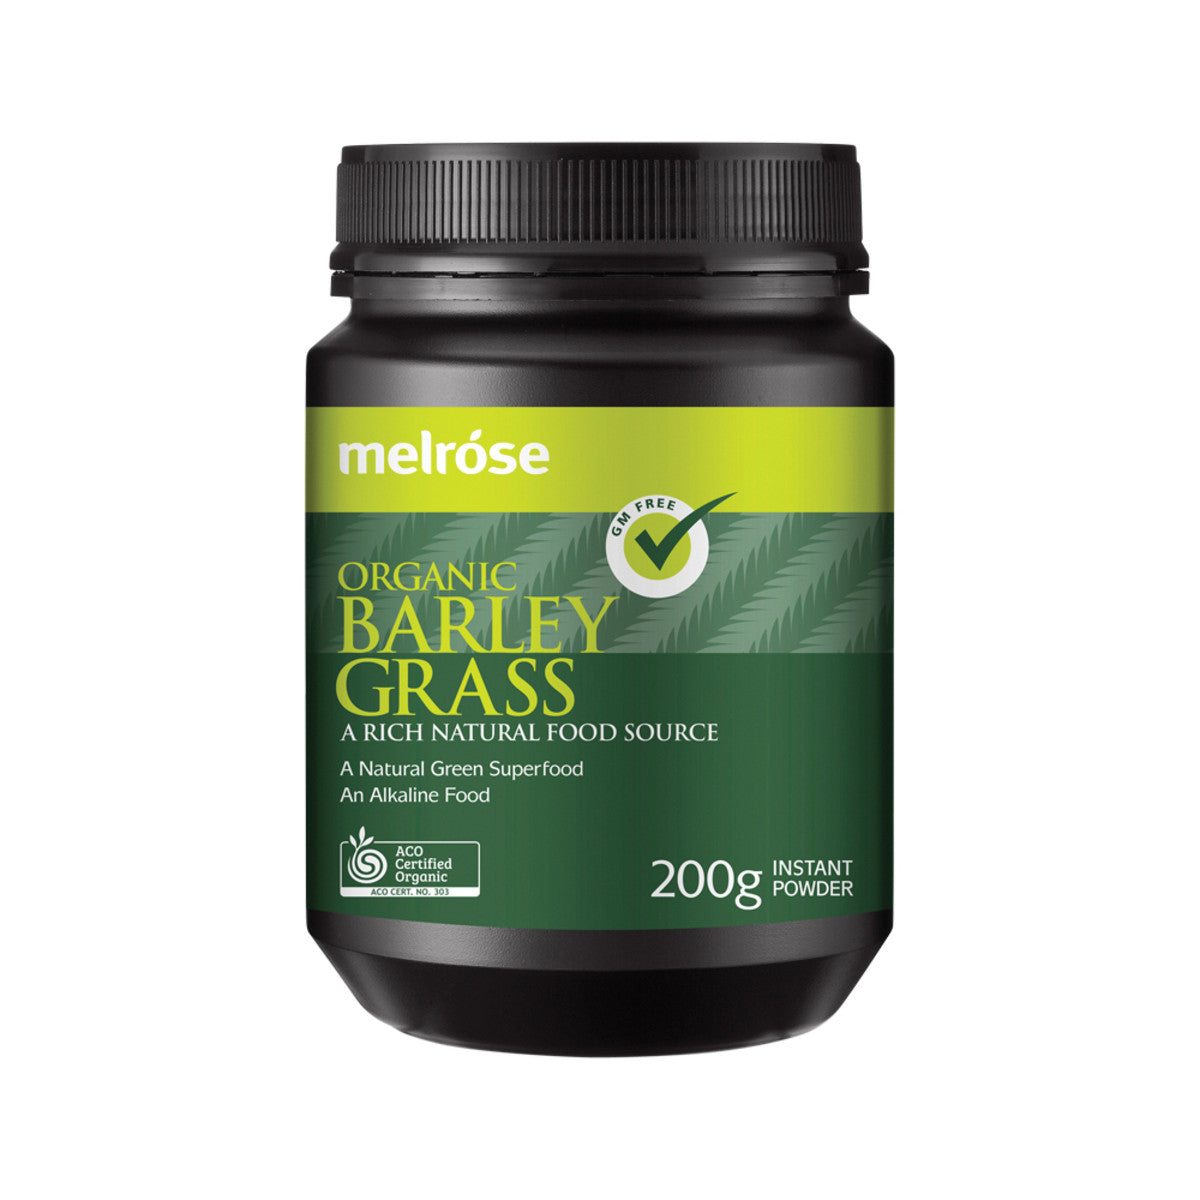 Melrose Organic Barleygrass Powder 200g Instant Powder-The Living Co.